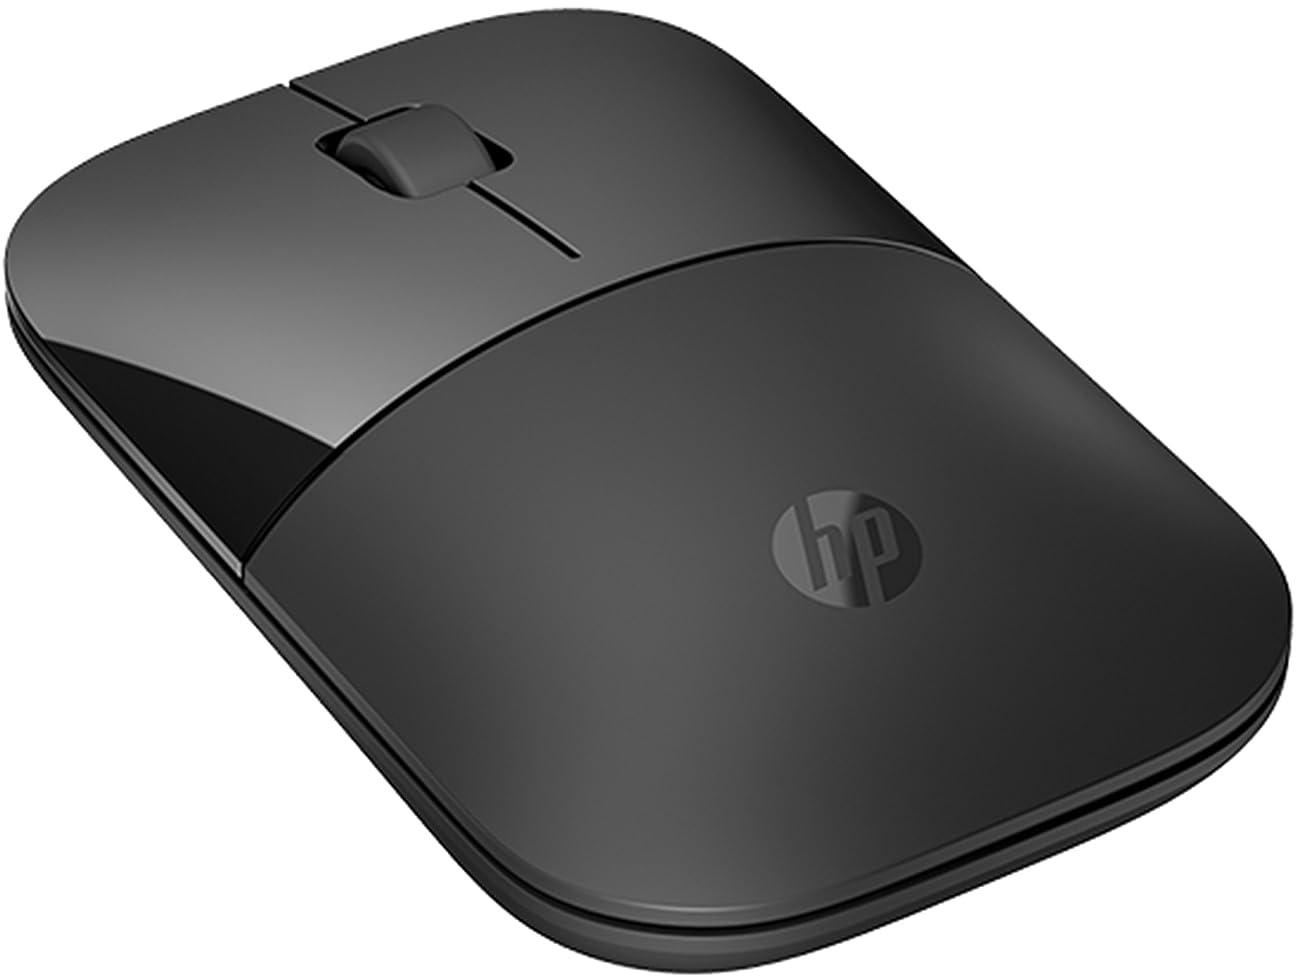 HP Z3700 kabellose Maus | 1200 optische Sensoren | bis zu 16 Monate Batterielaufzeit | 2.4 GHz oder Bluetooth Verbindung | Plug&Play | Schwarz